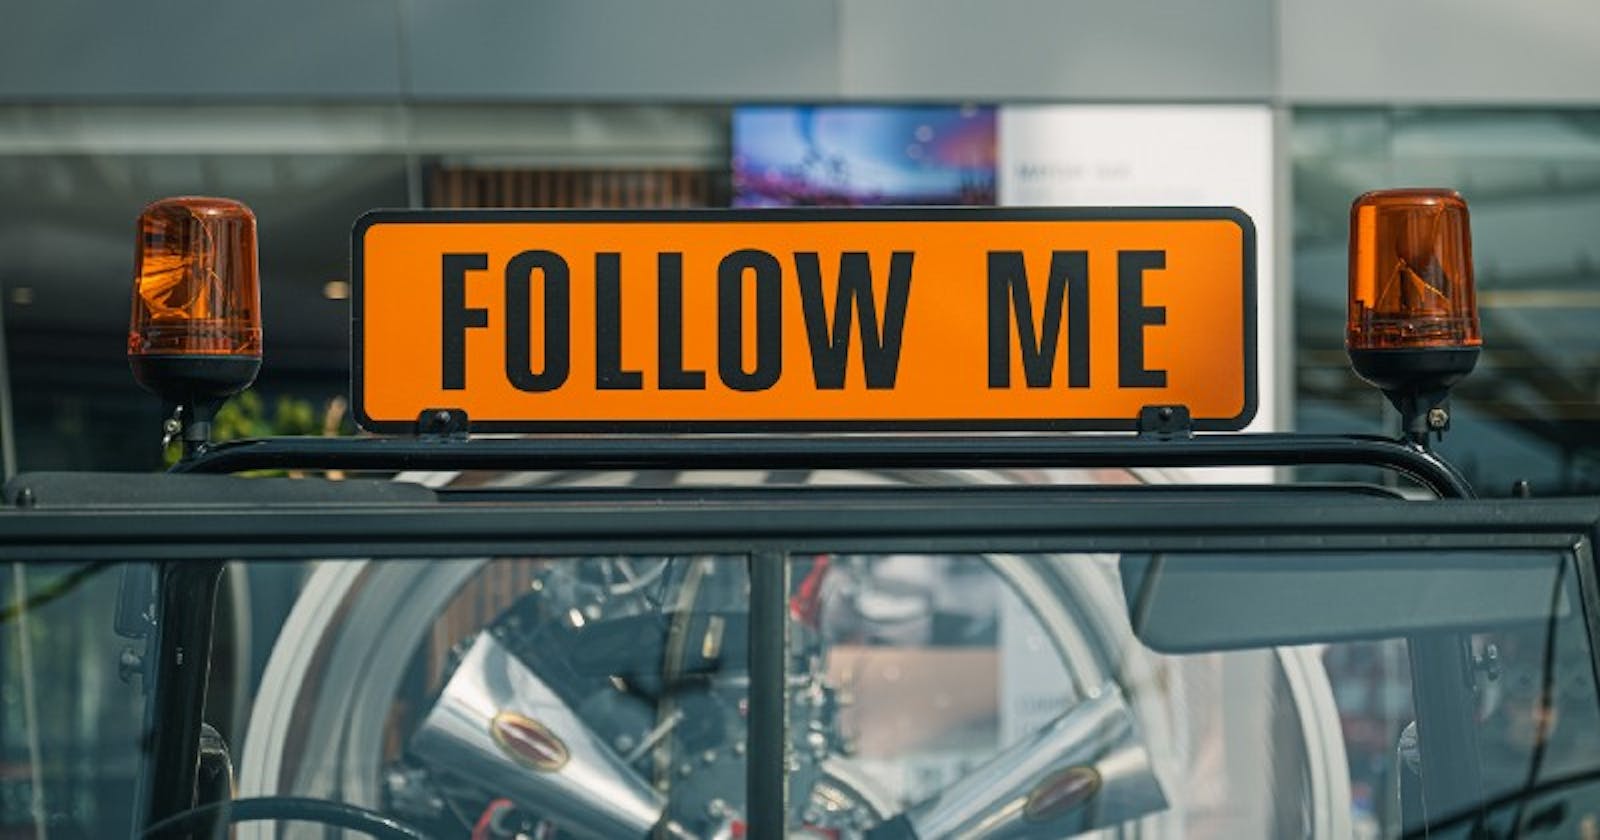 Do you need 100 followers on medium ? Let’s follow each other .